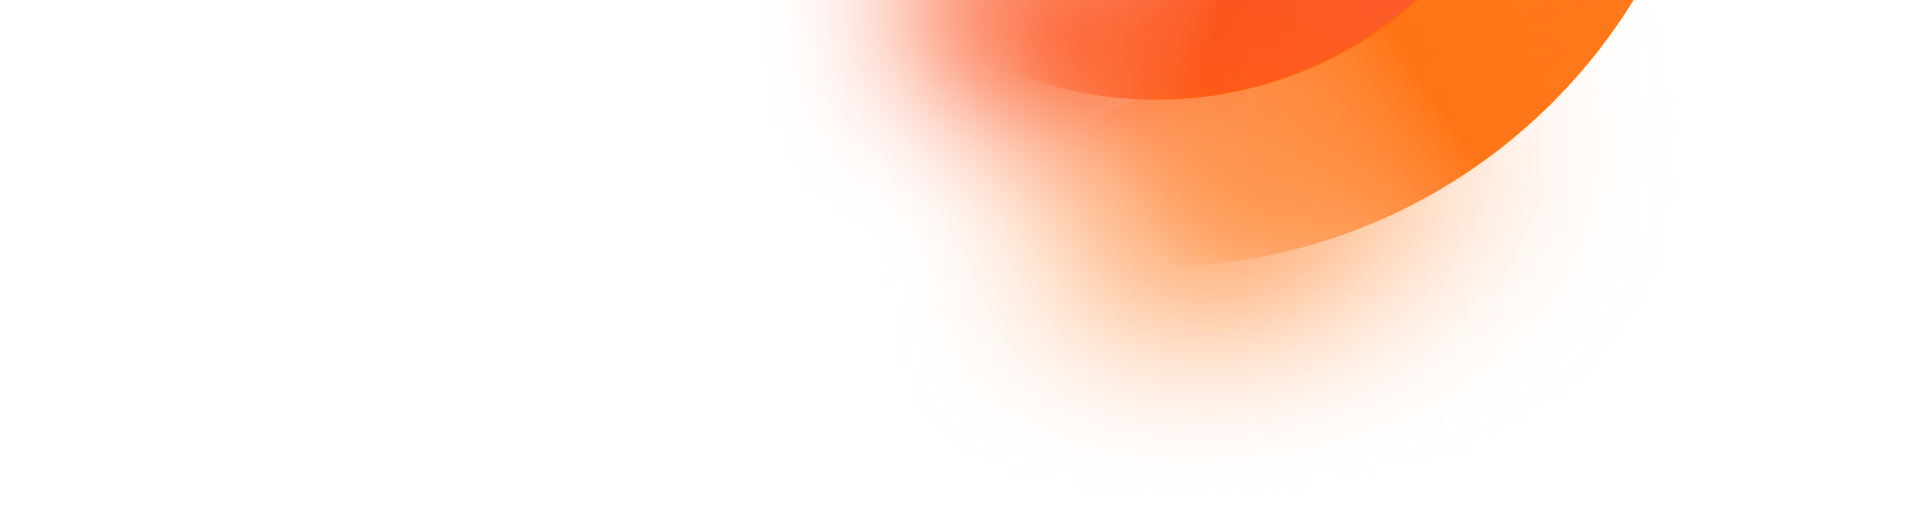 Immagine banner background pattern geometrici arancioni - offerta mobile - WINDTRE